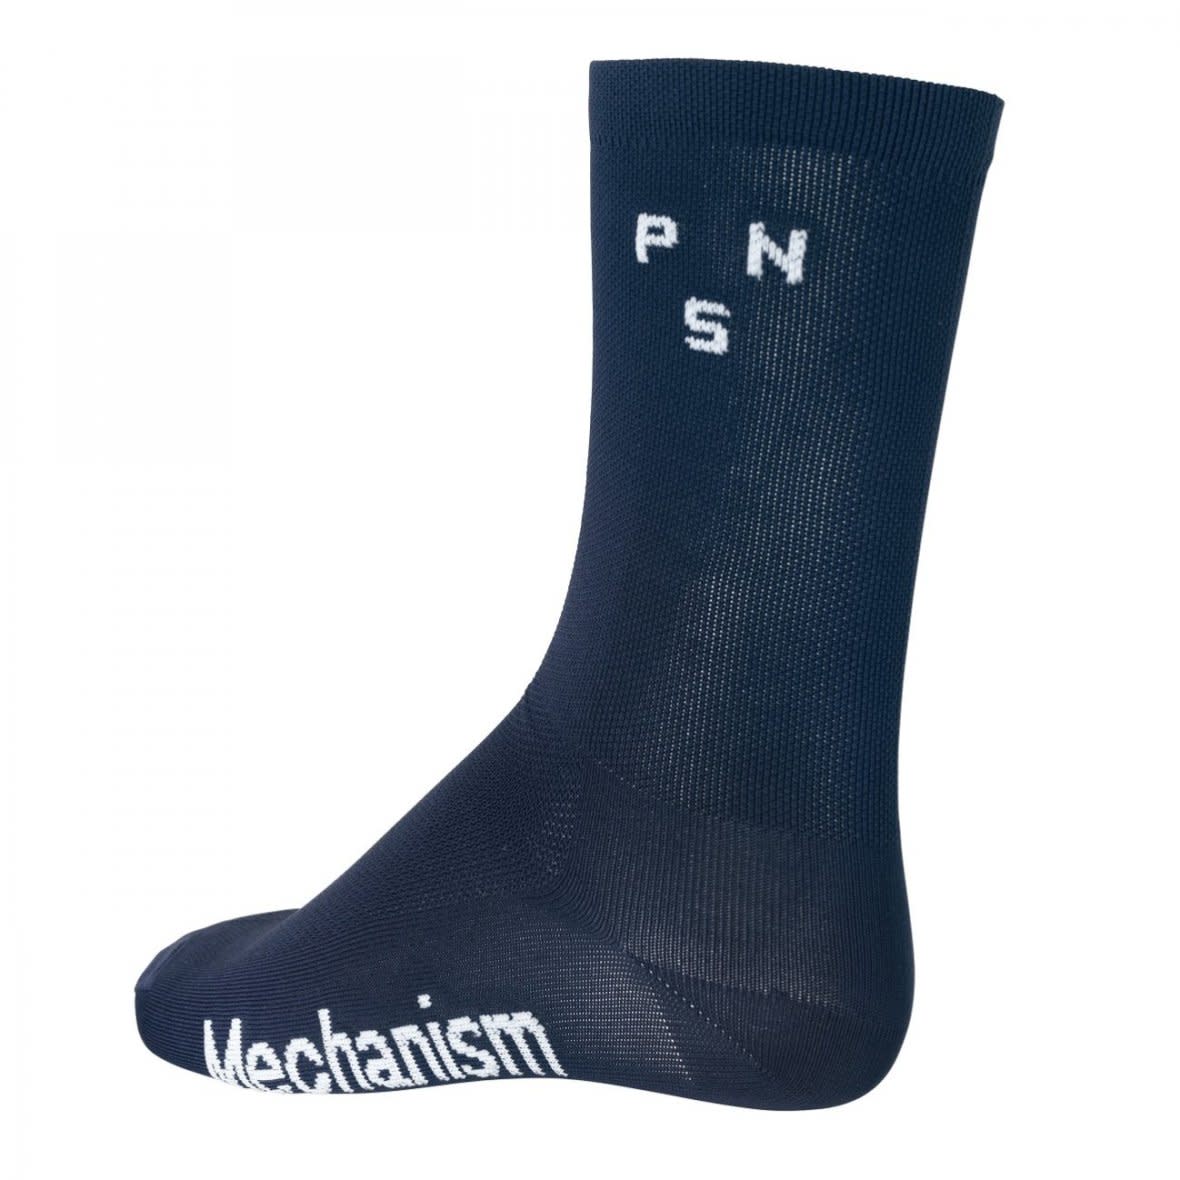 PAS NORMAL STUDIOS Mechanism Socks - Navy